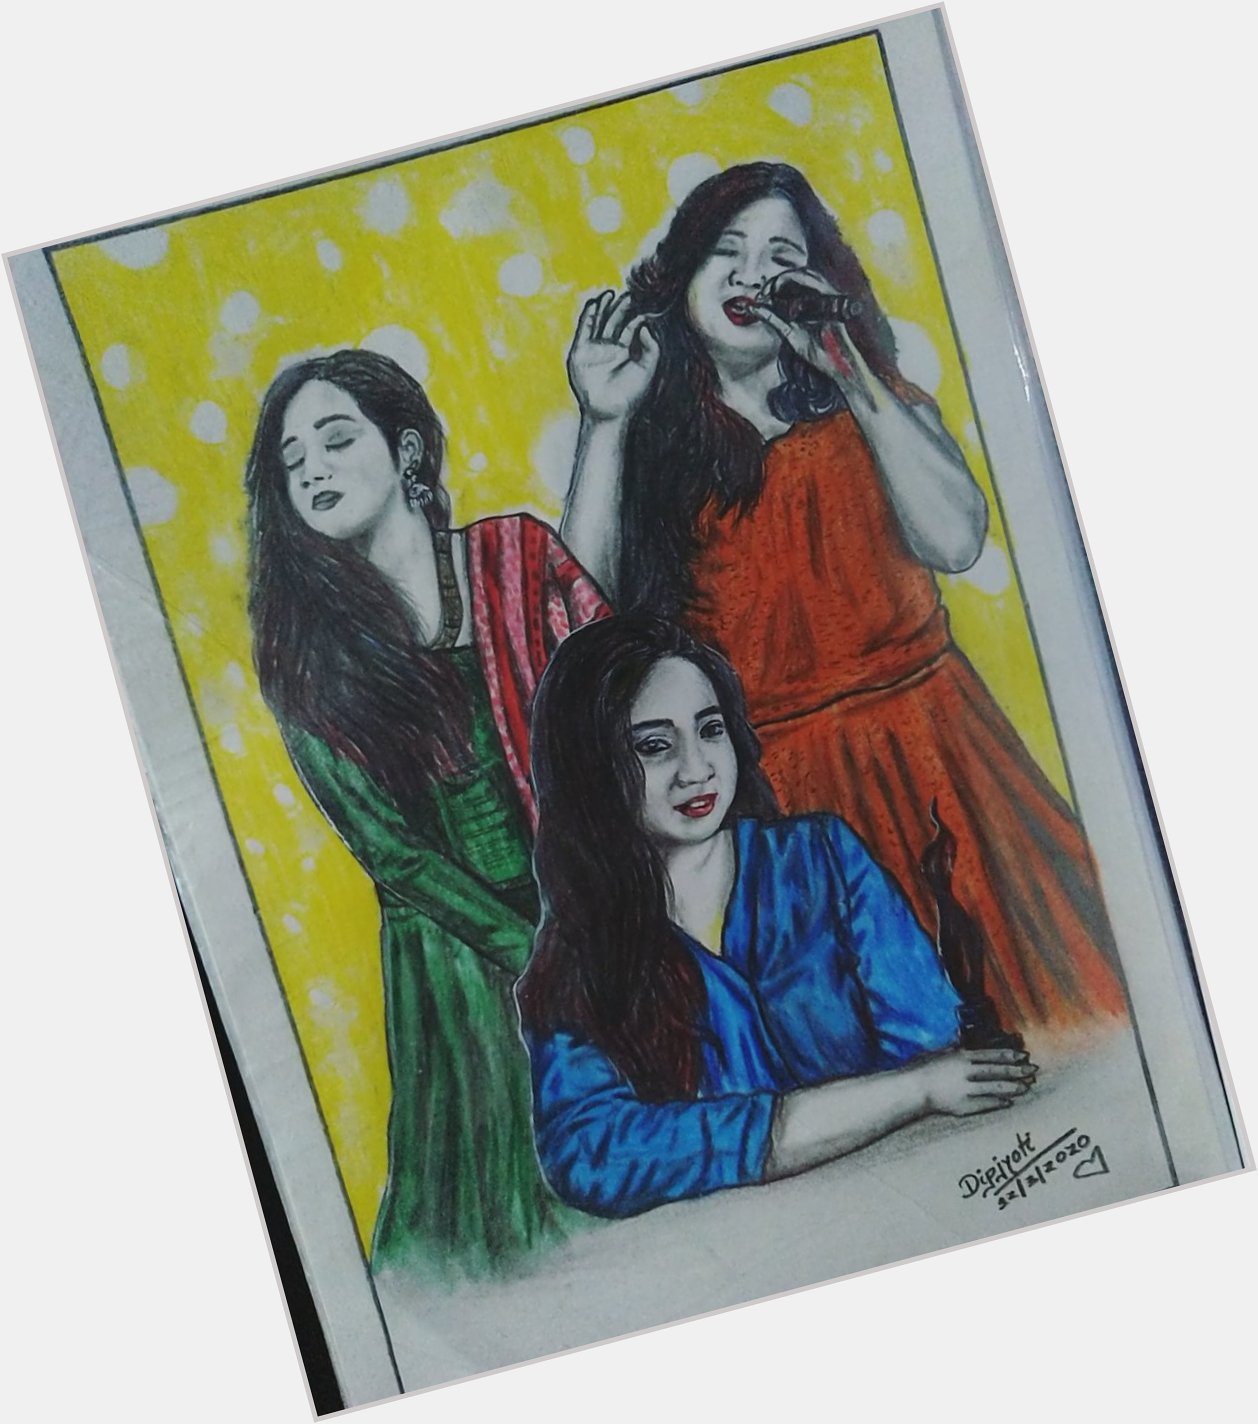  happy birthday to you ma\am.  
Painting of Shreya Ghoshal. 